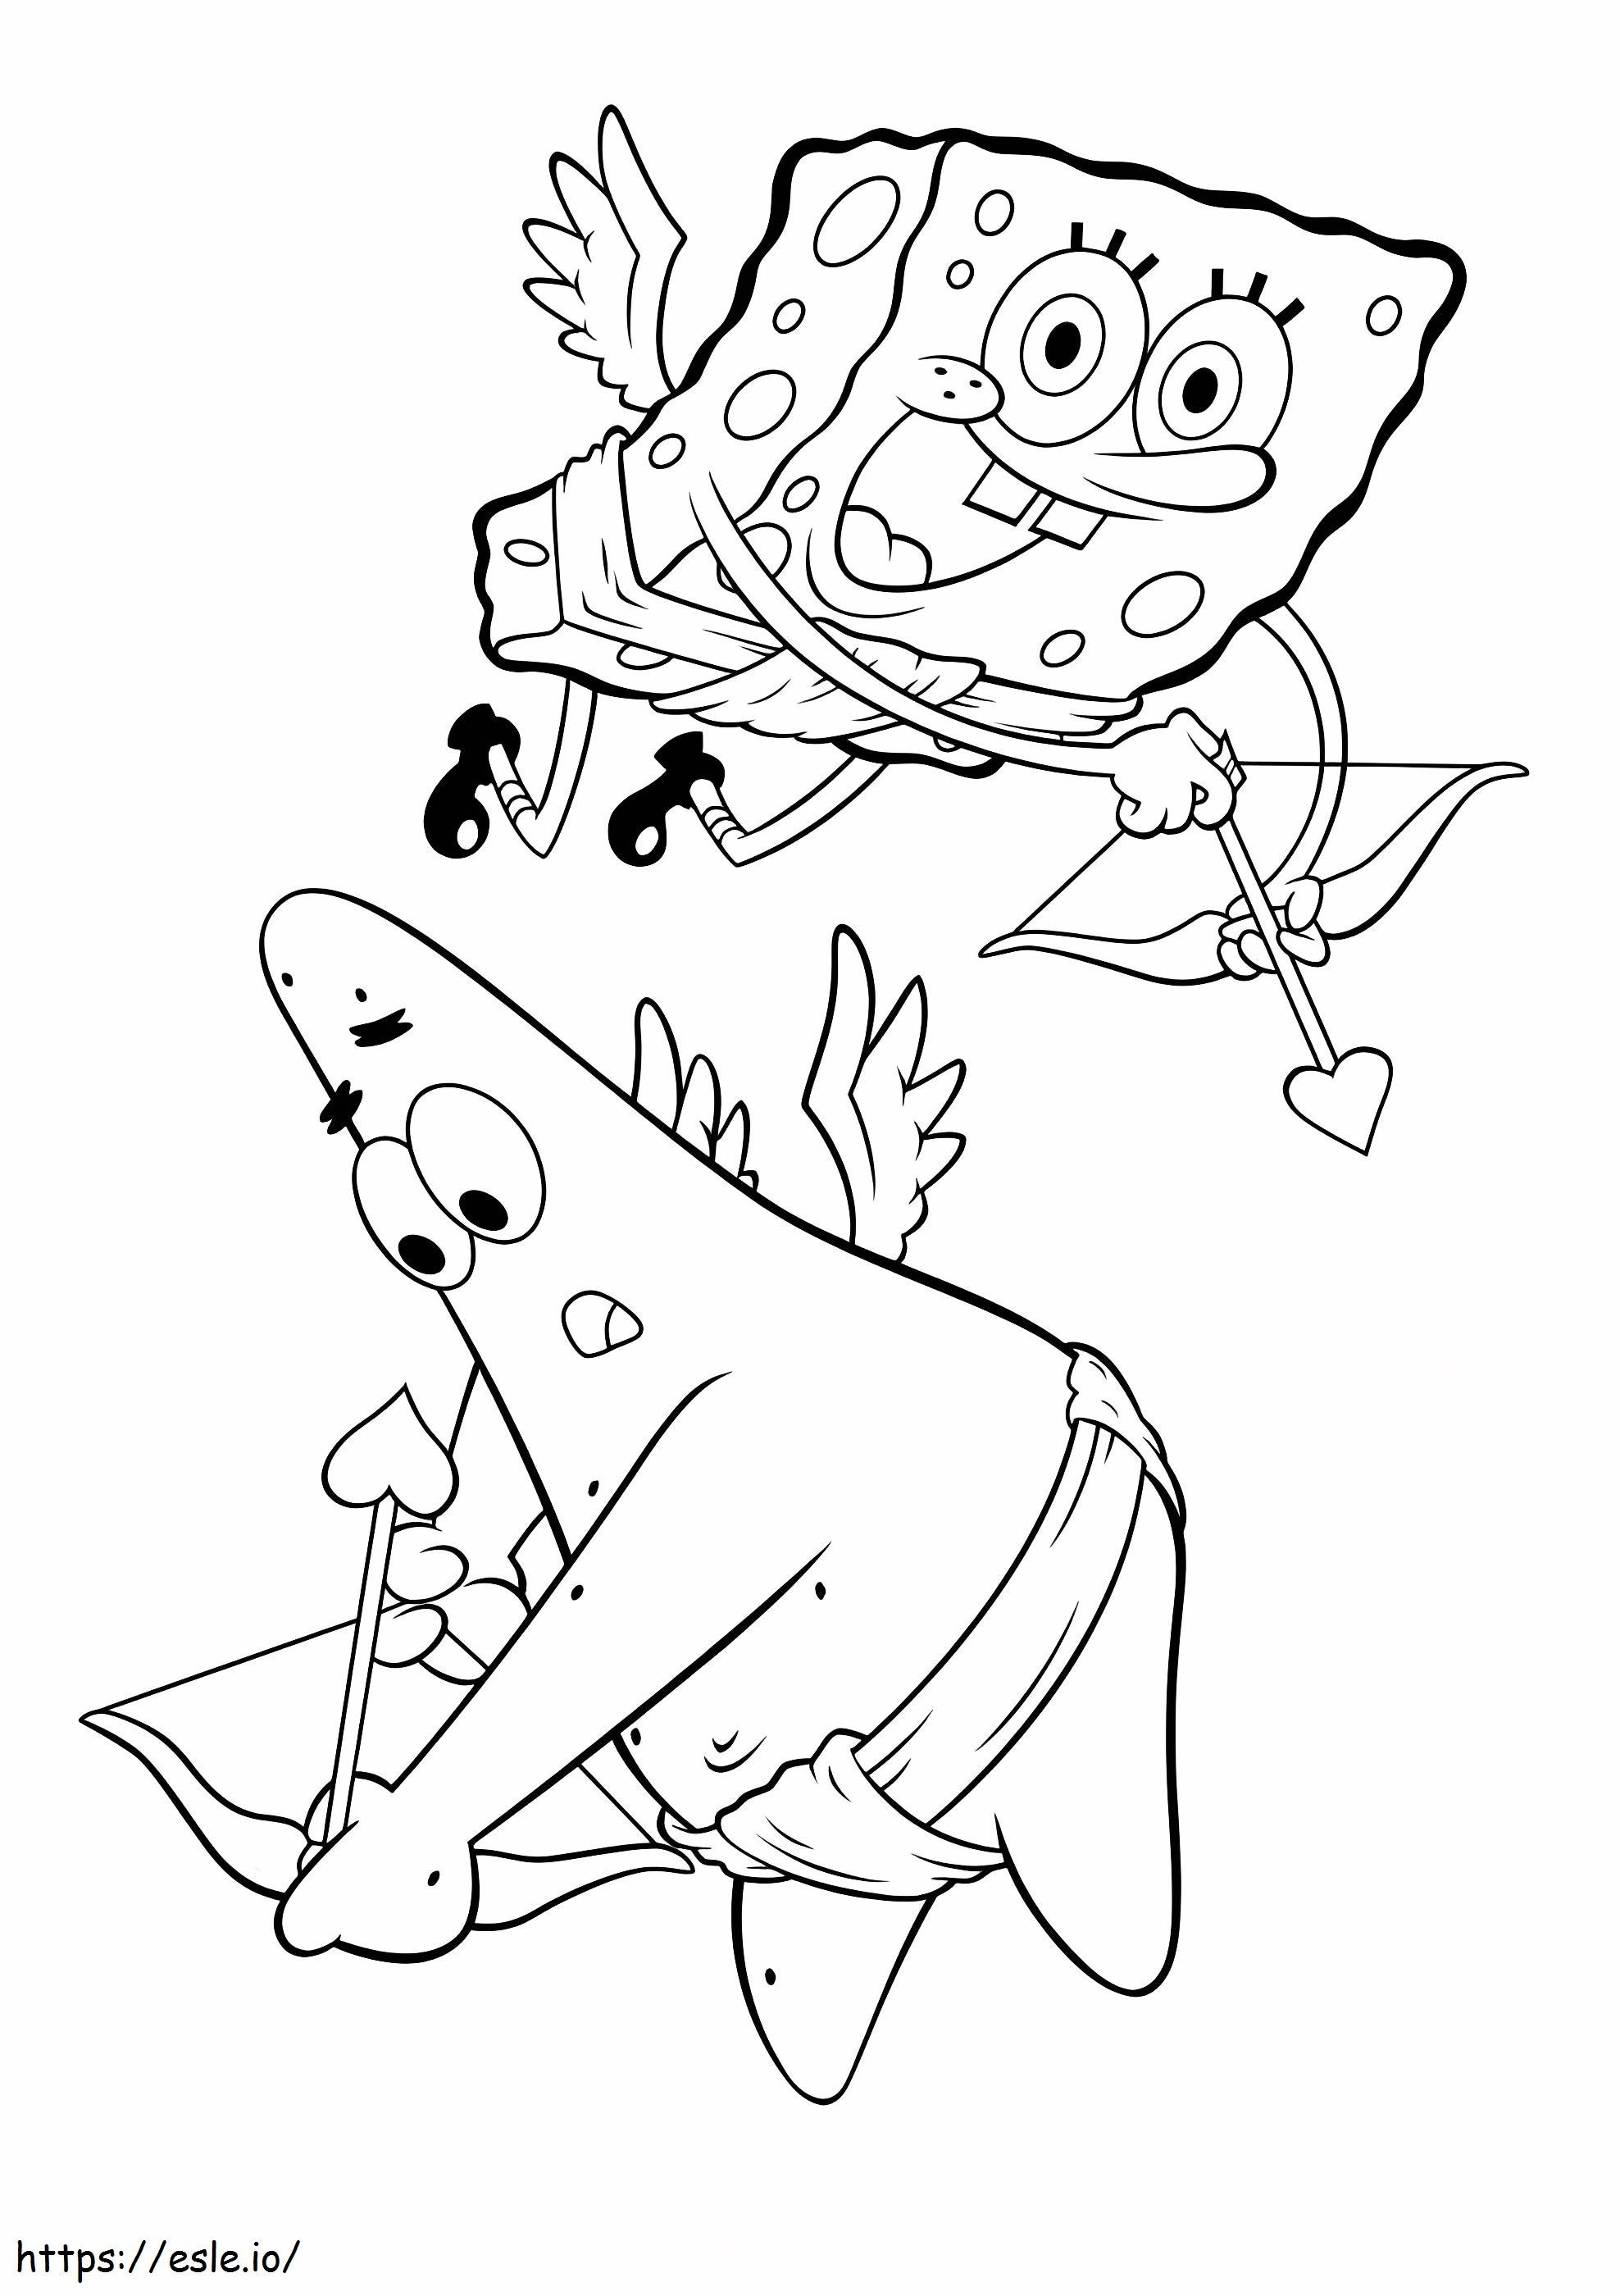 Patrick Star And Spongebob Cupid coloring page